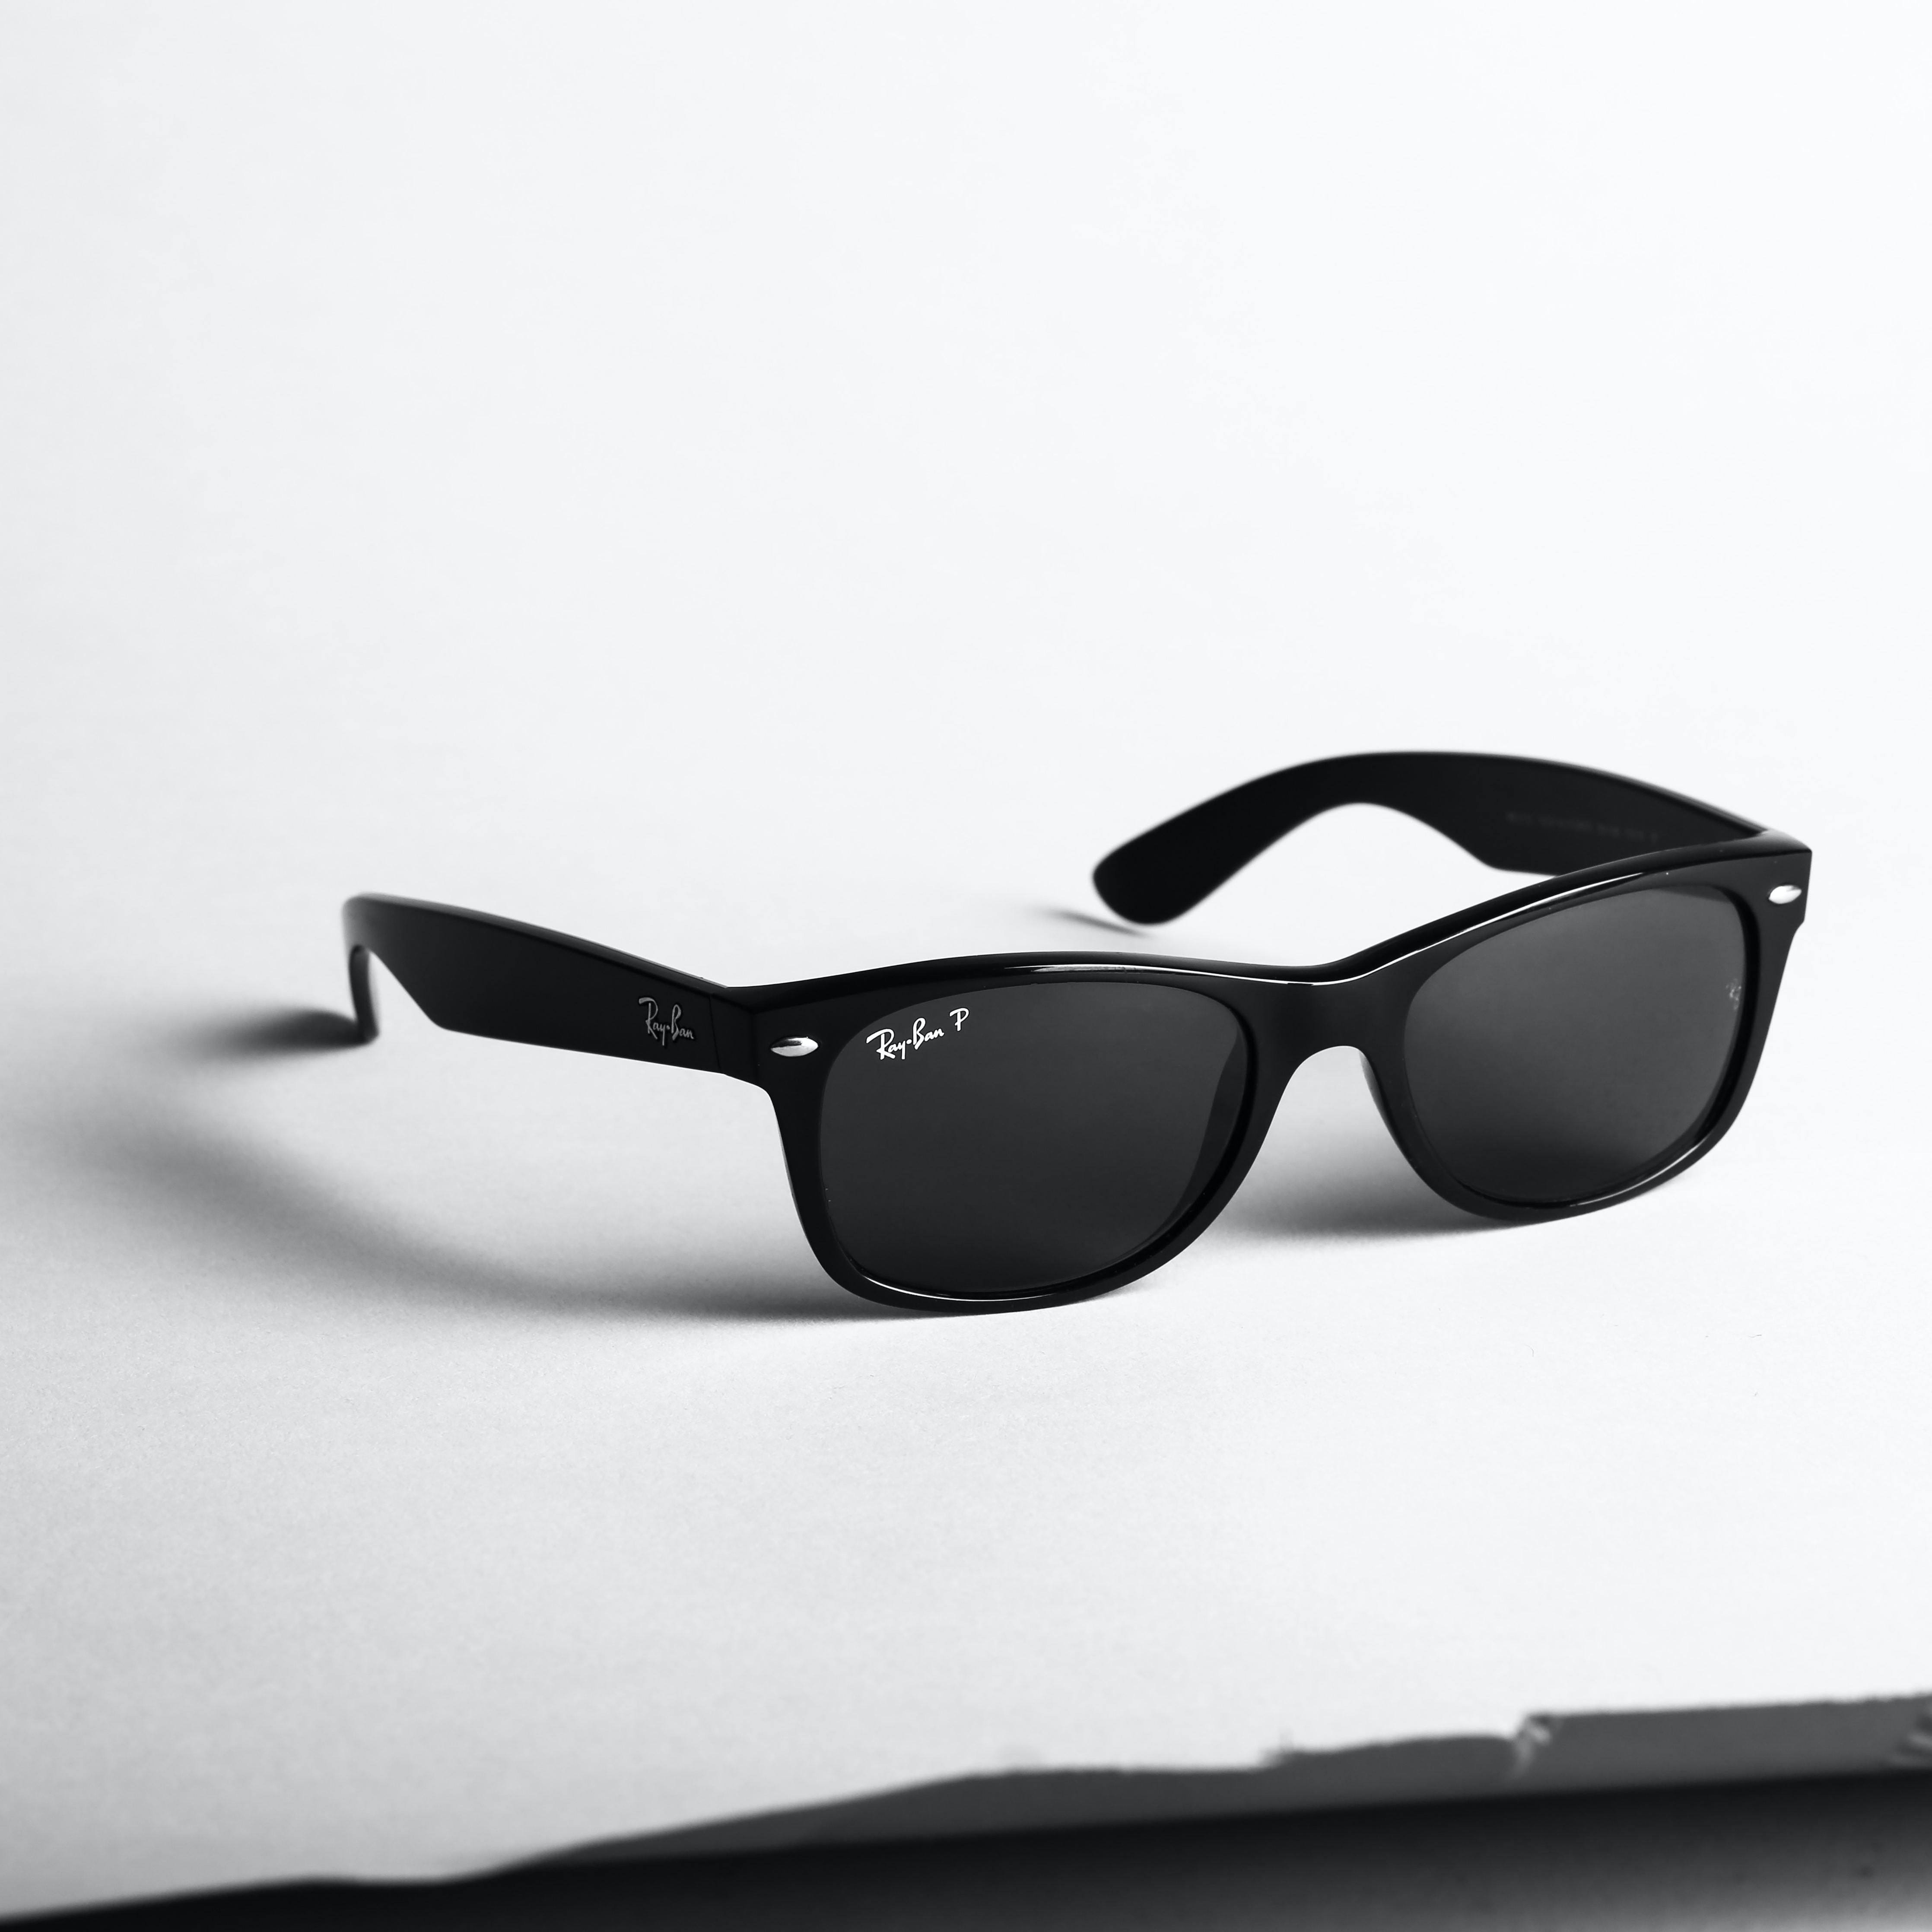 Designer Sunglasses Compared